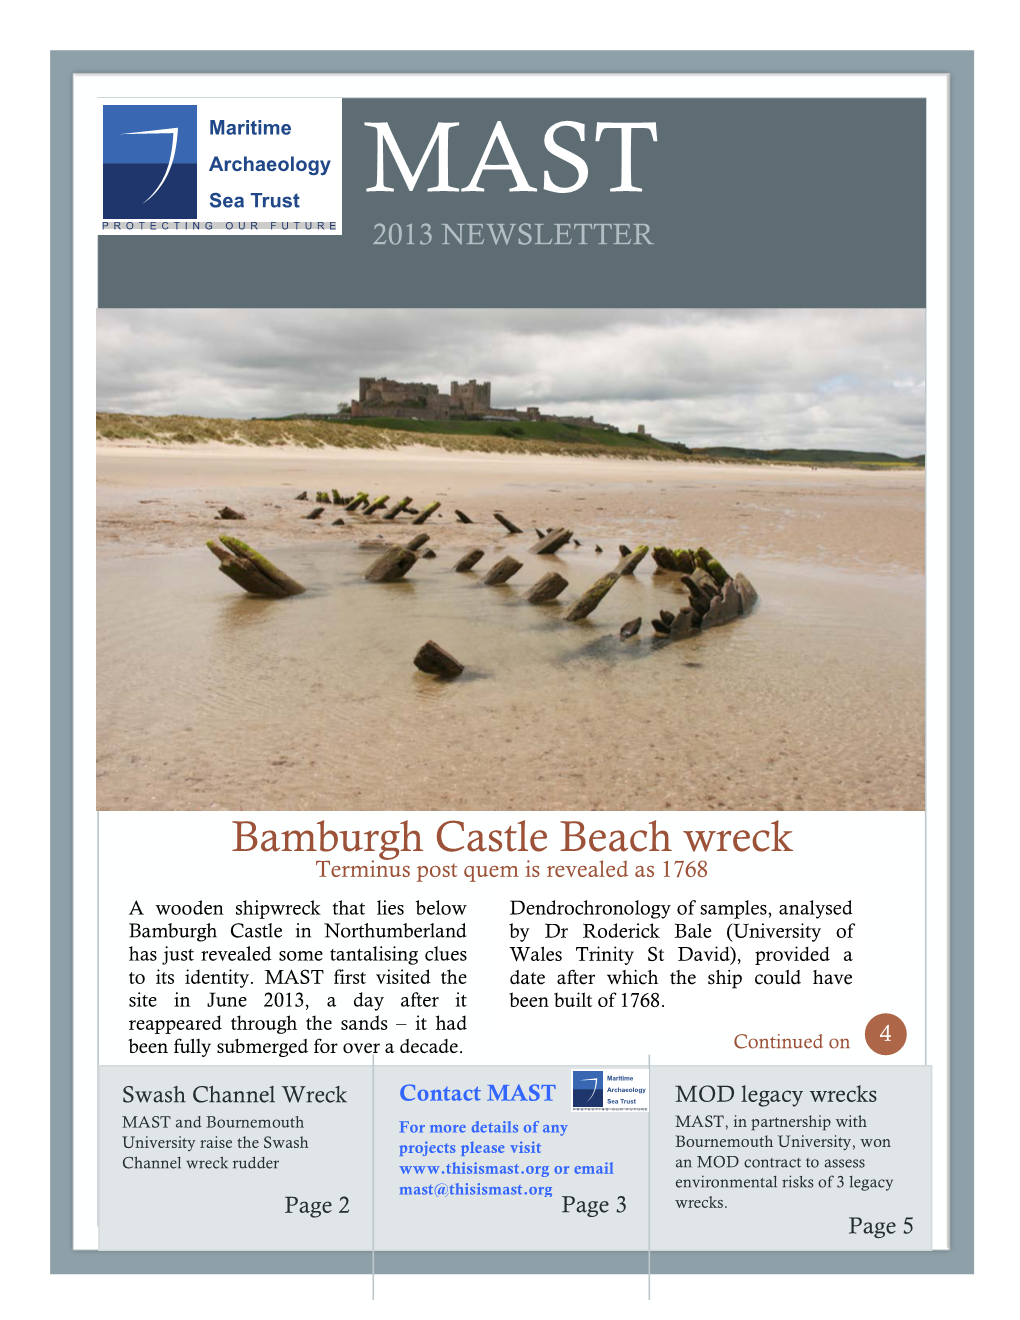 Bamburgh Castle Beach Wreck